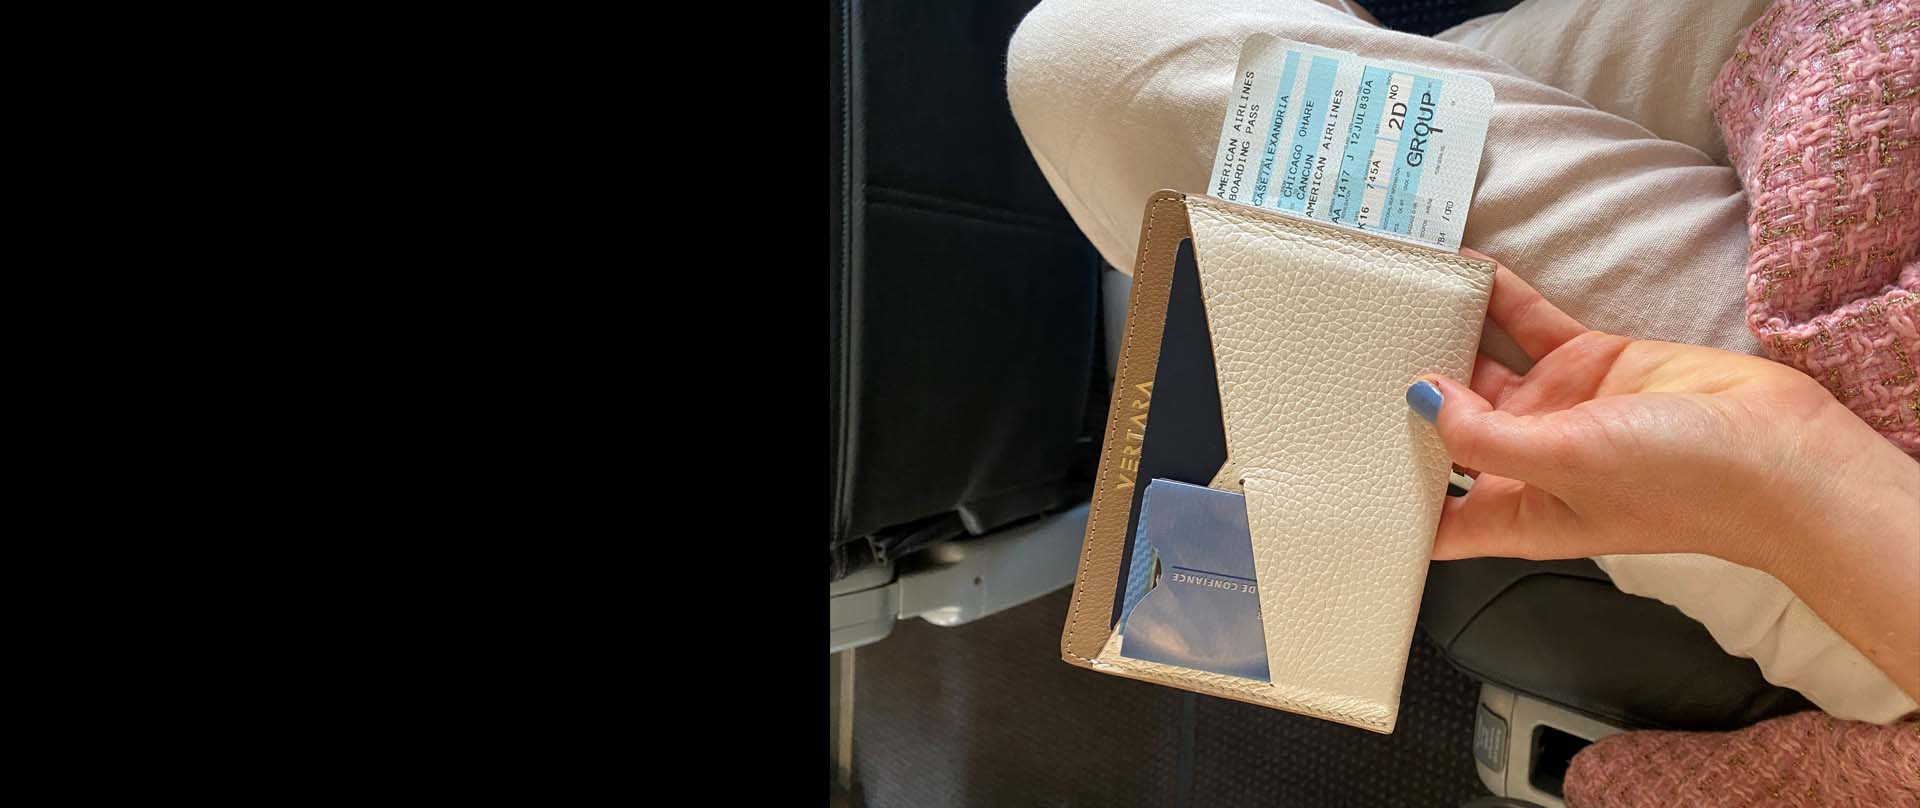 Sleek & Secure Nomad Passport Holder in beige & white leather